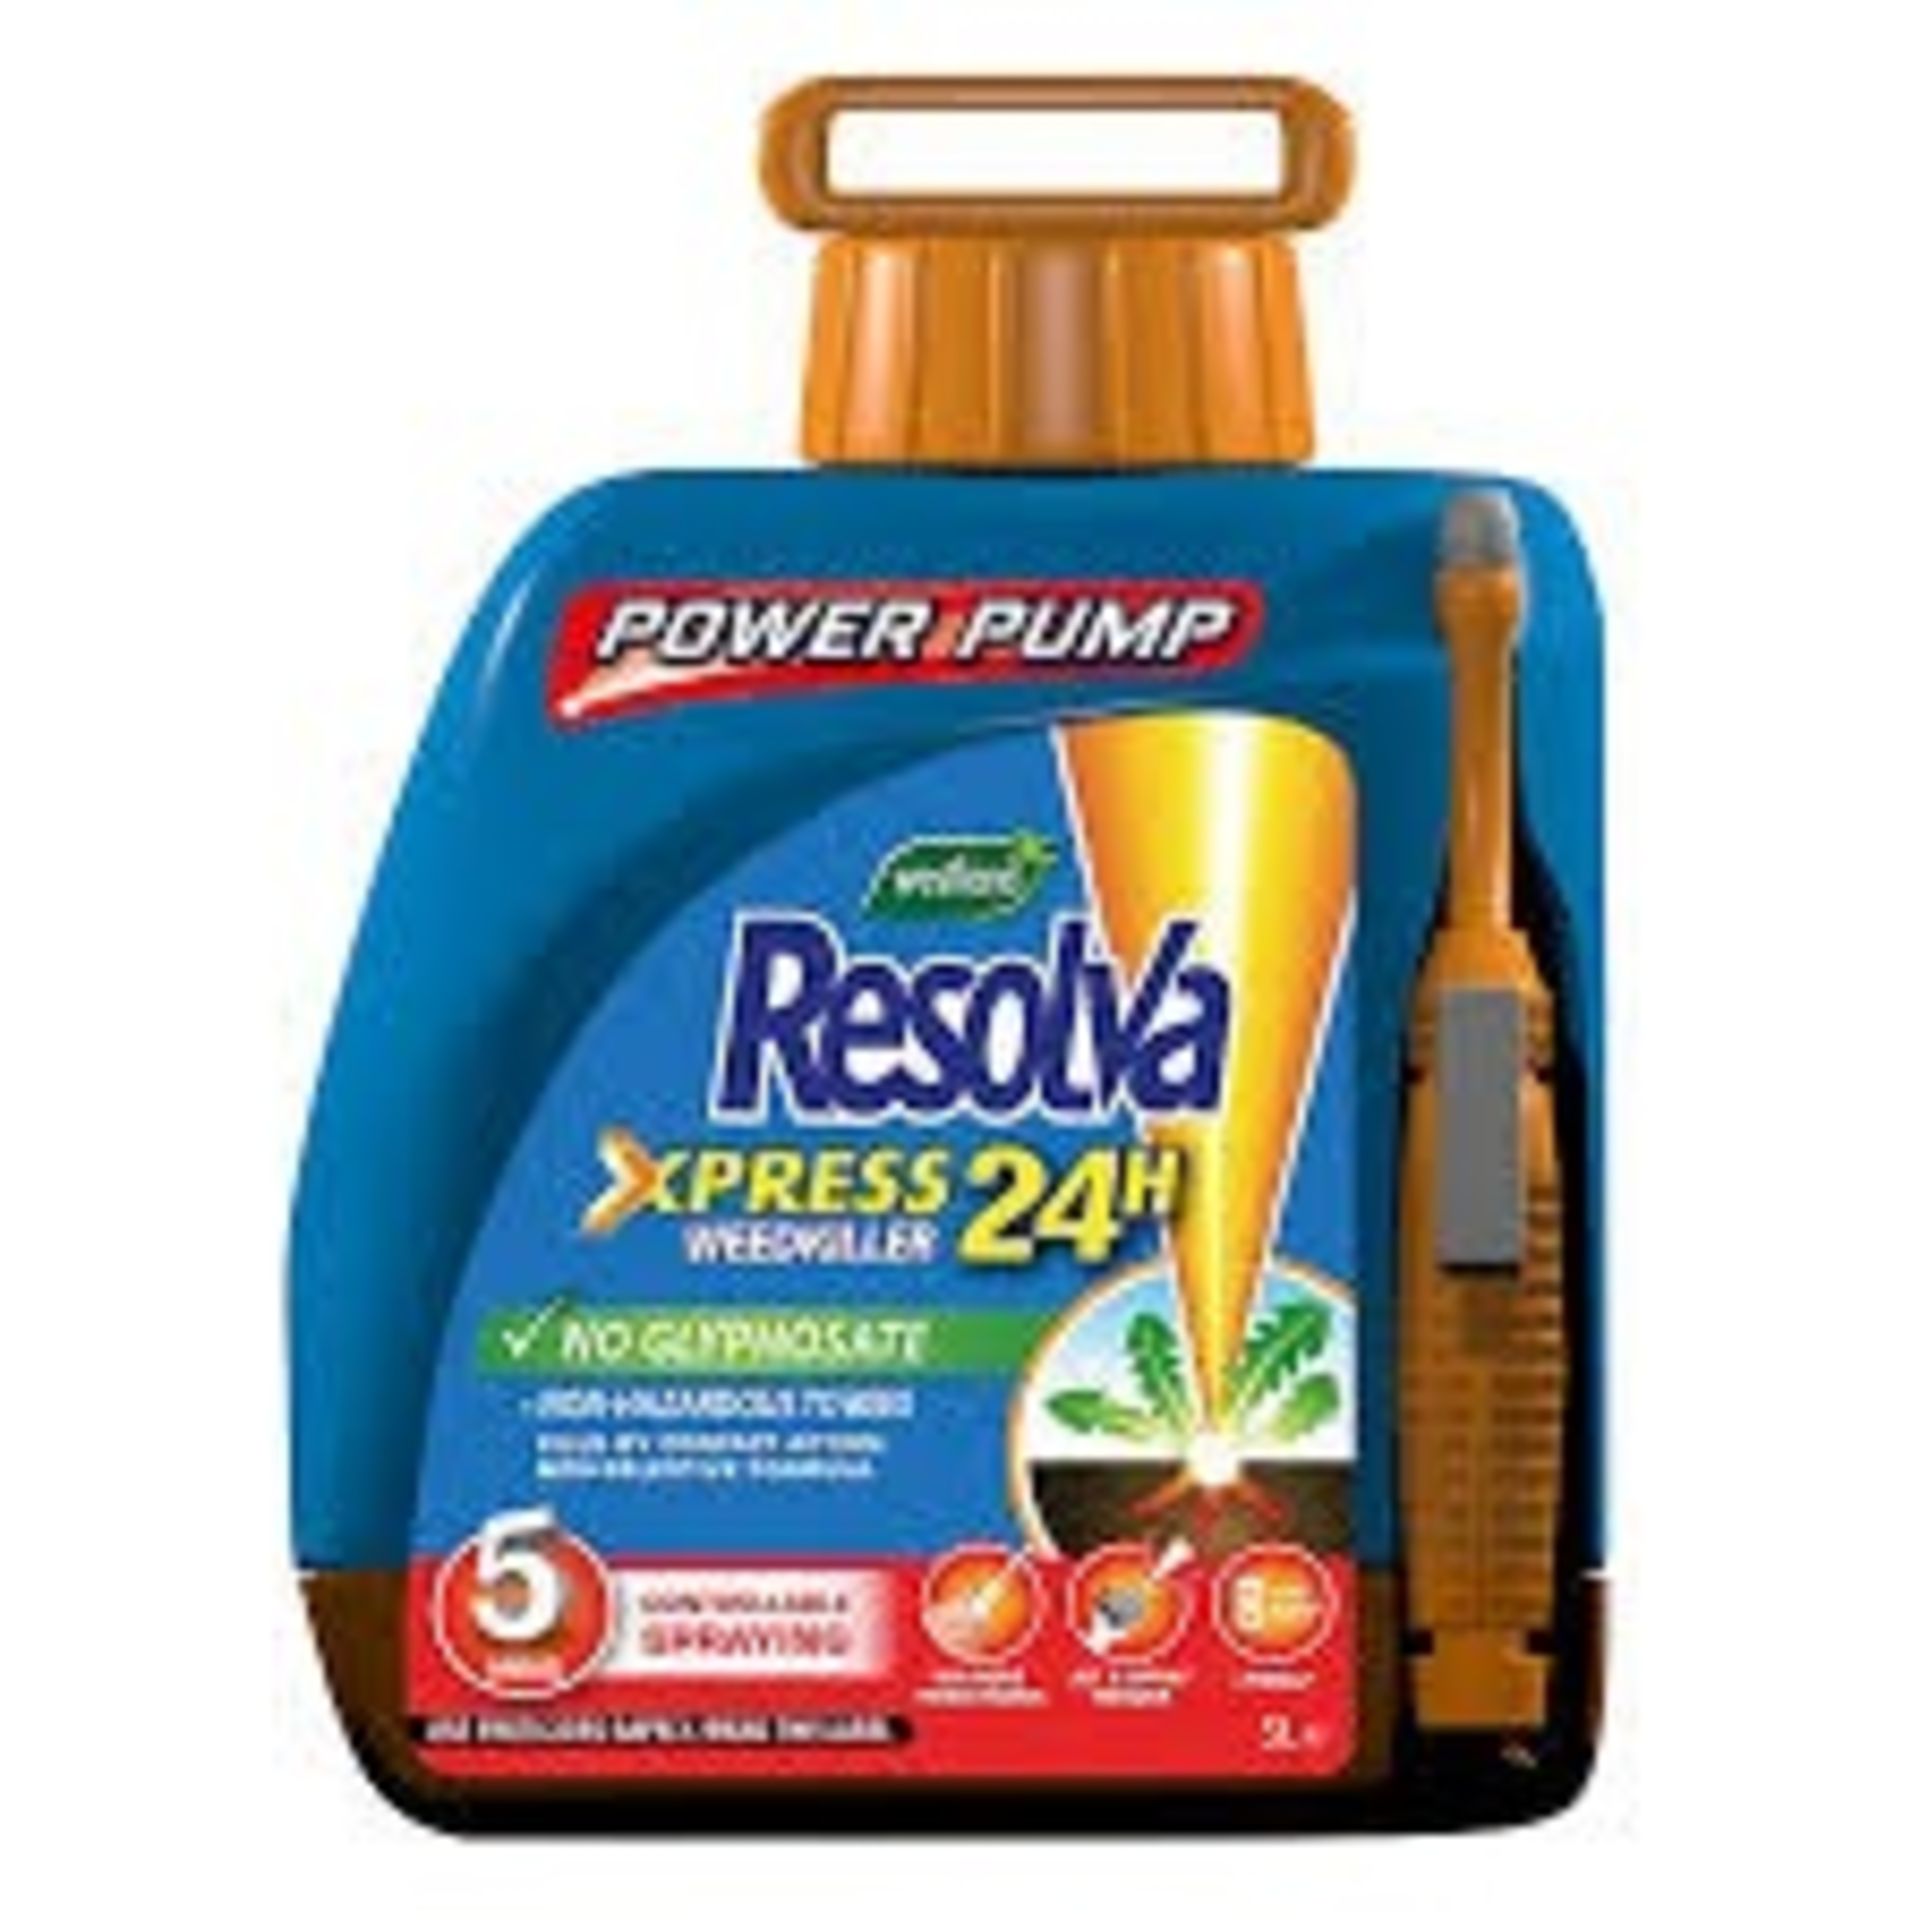 Resolva Power pump xpress Weed killer 5L - ER41